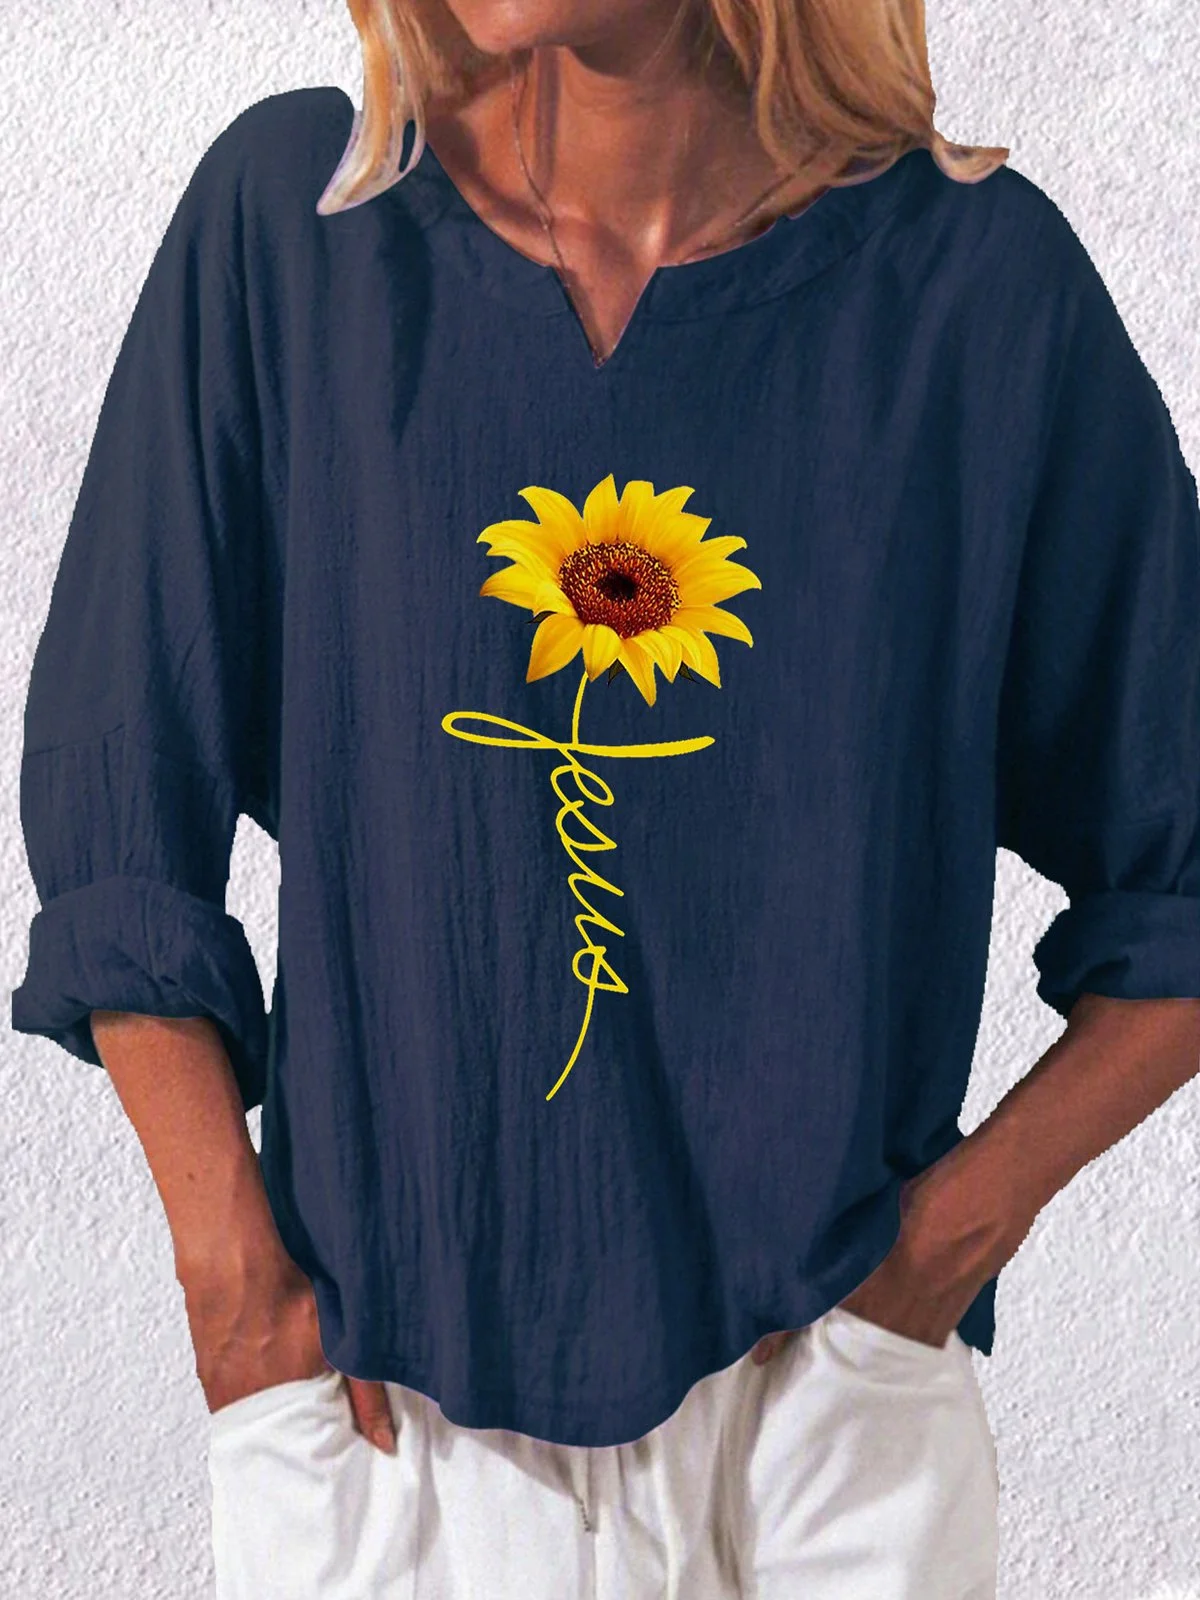 Women's Sunflower Jesus Faith Print Cotton Shirt